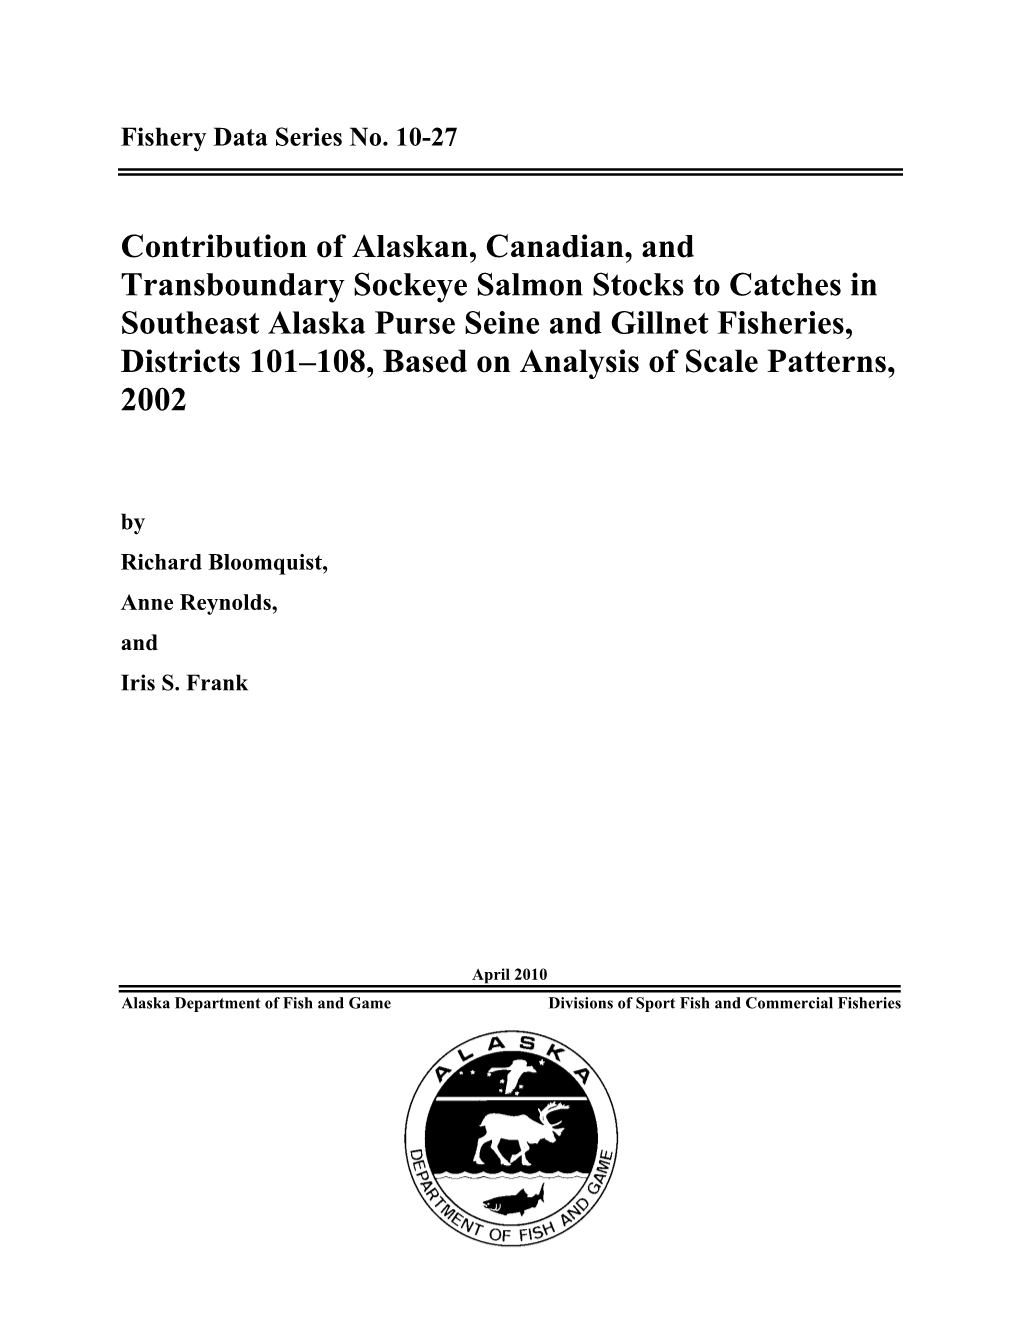 Contribution of Alaskan, Canadian, and Transboundary Sockeye Salmon